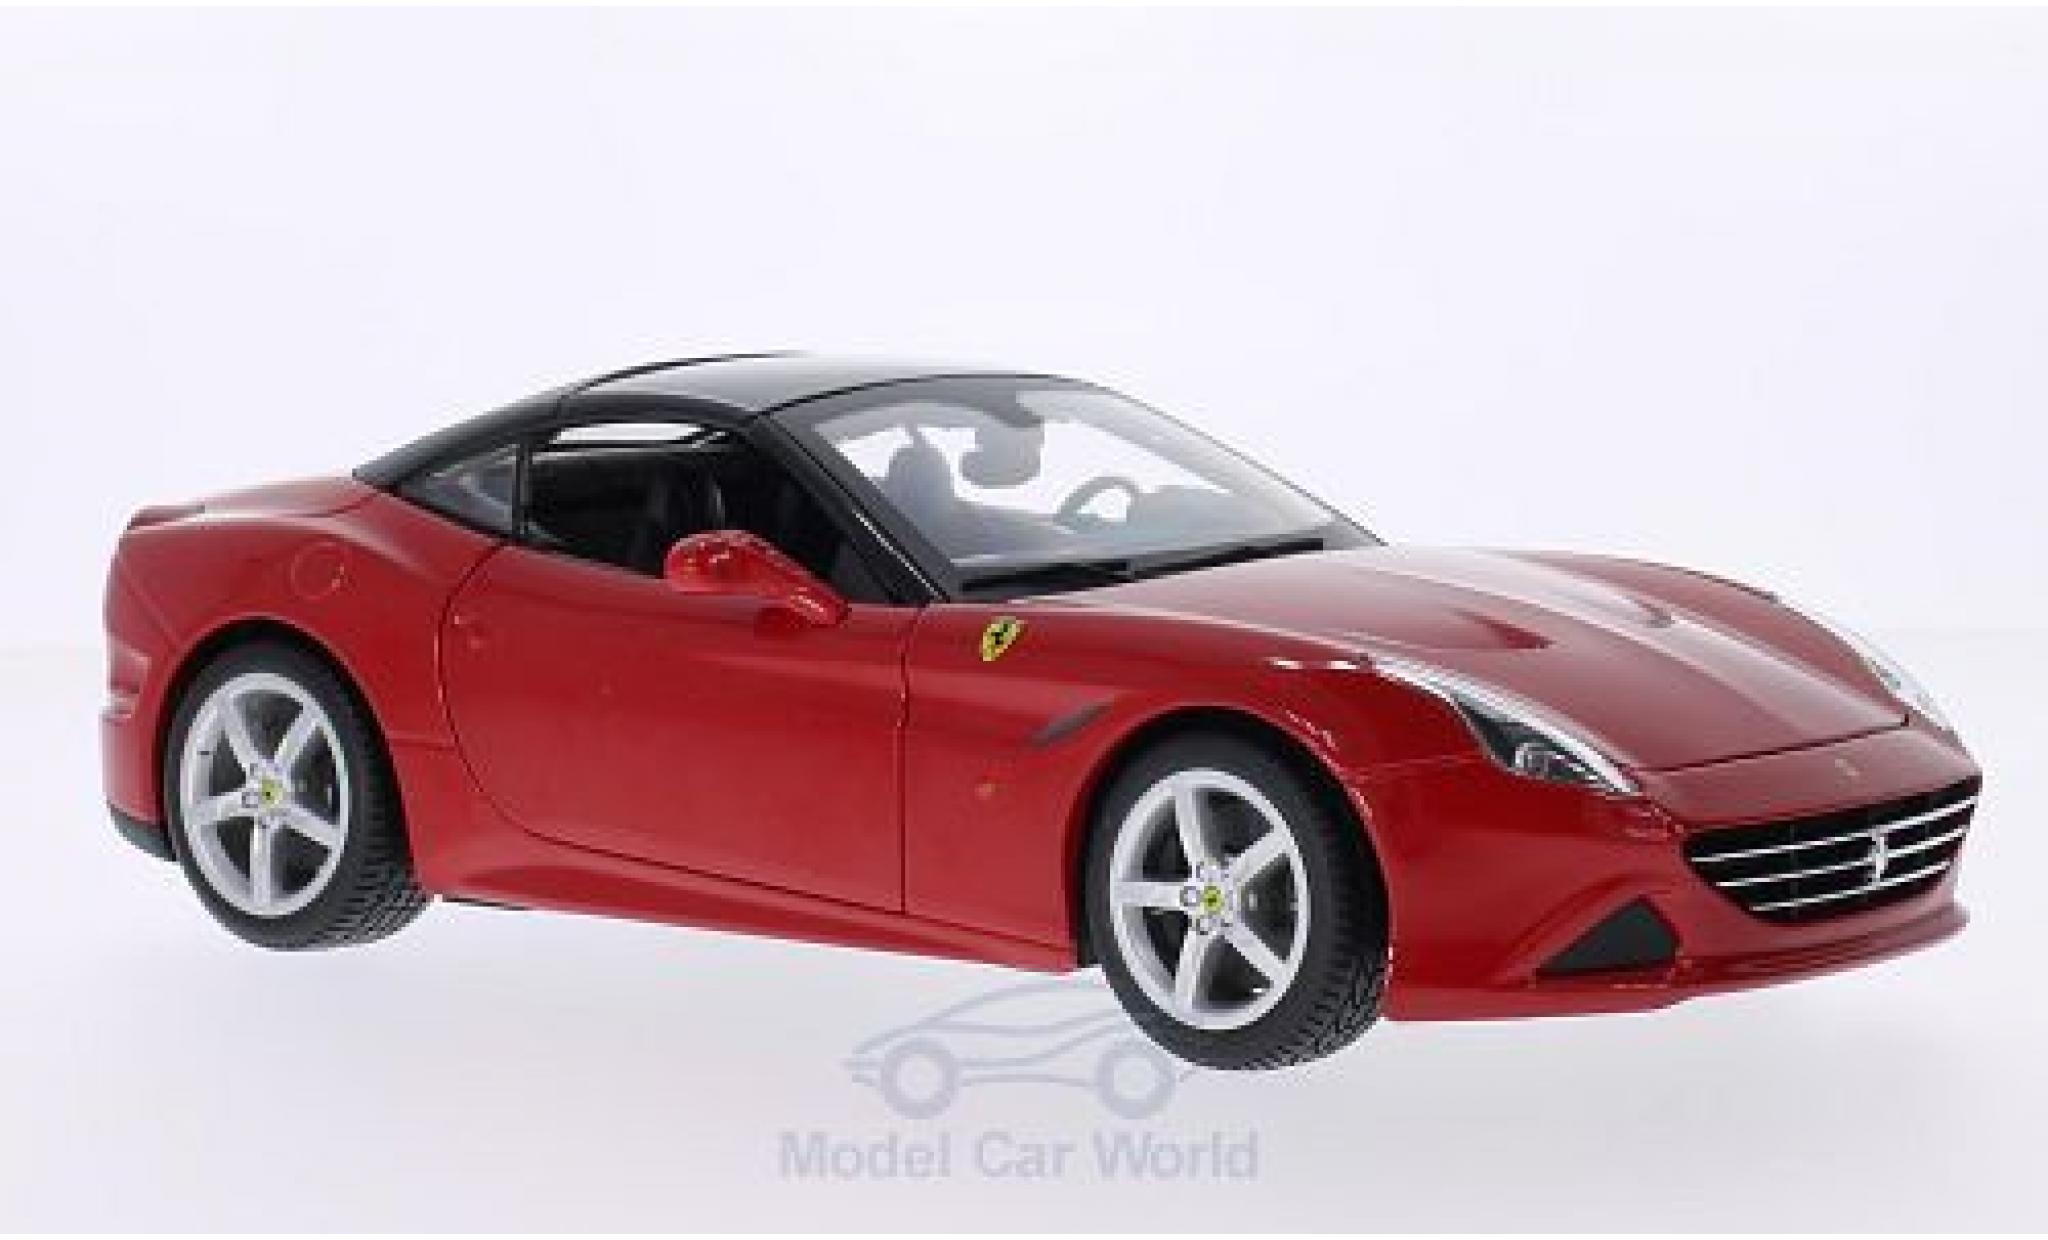 New Burago 1/18 For Ferrari California T Metal Diecast Car Model  White/Red/Black/Blue